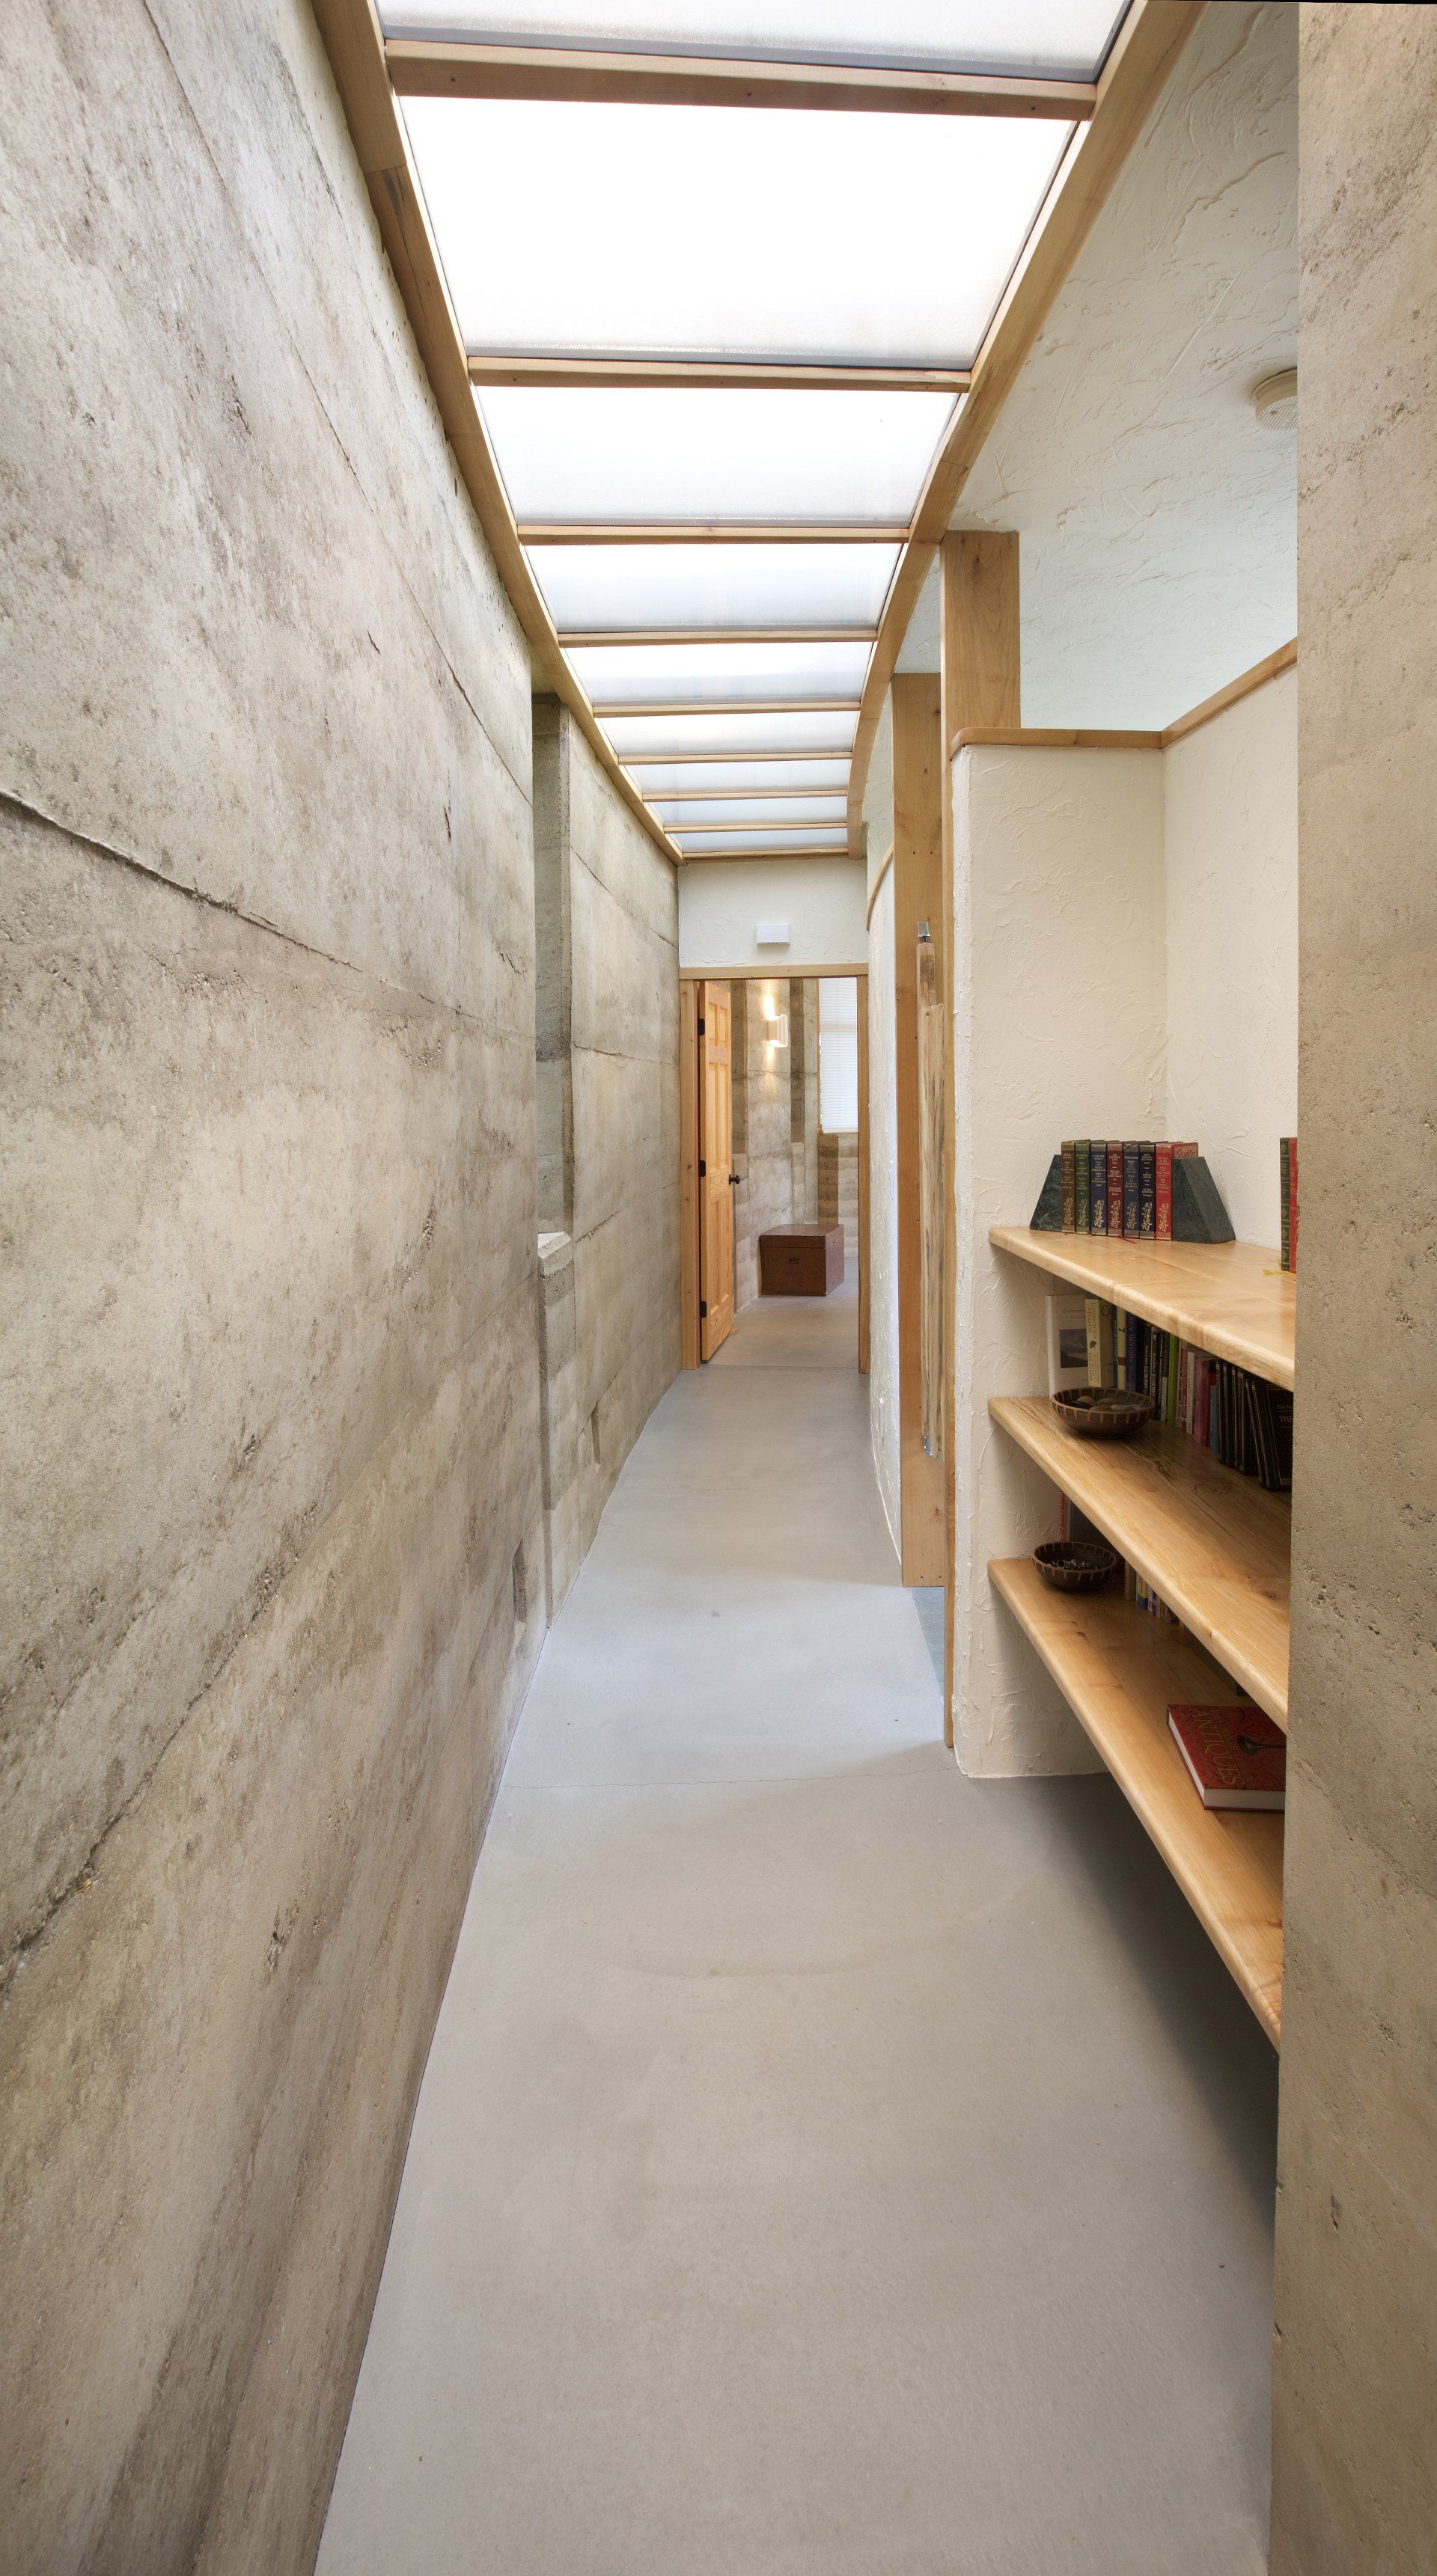 long hallway with a bookshelf and SIREWALLs